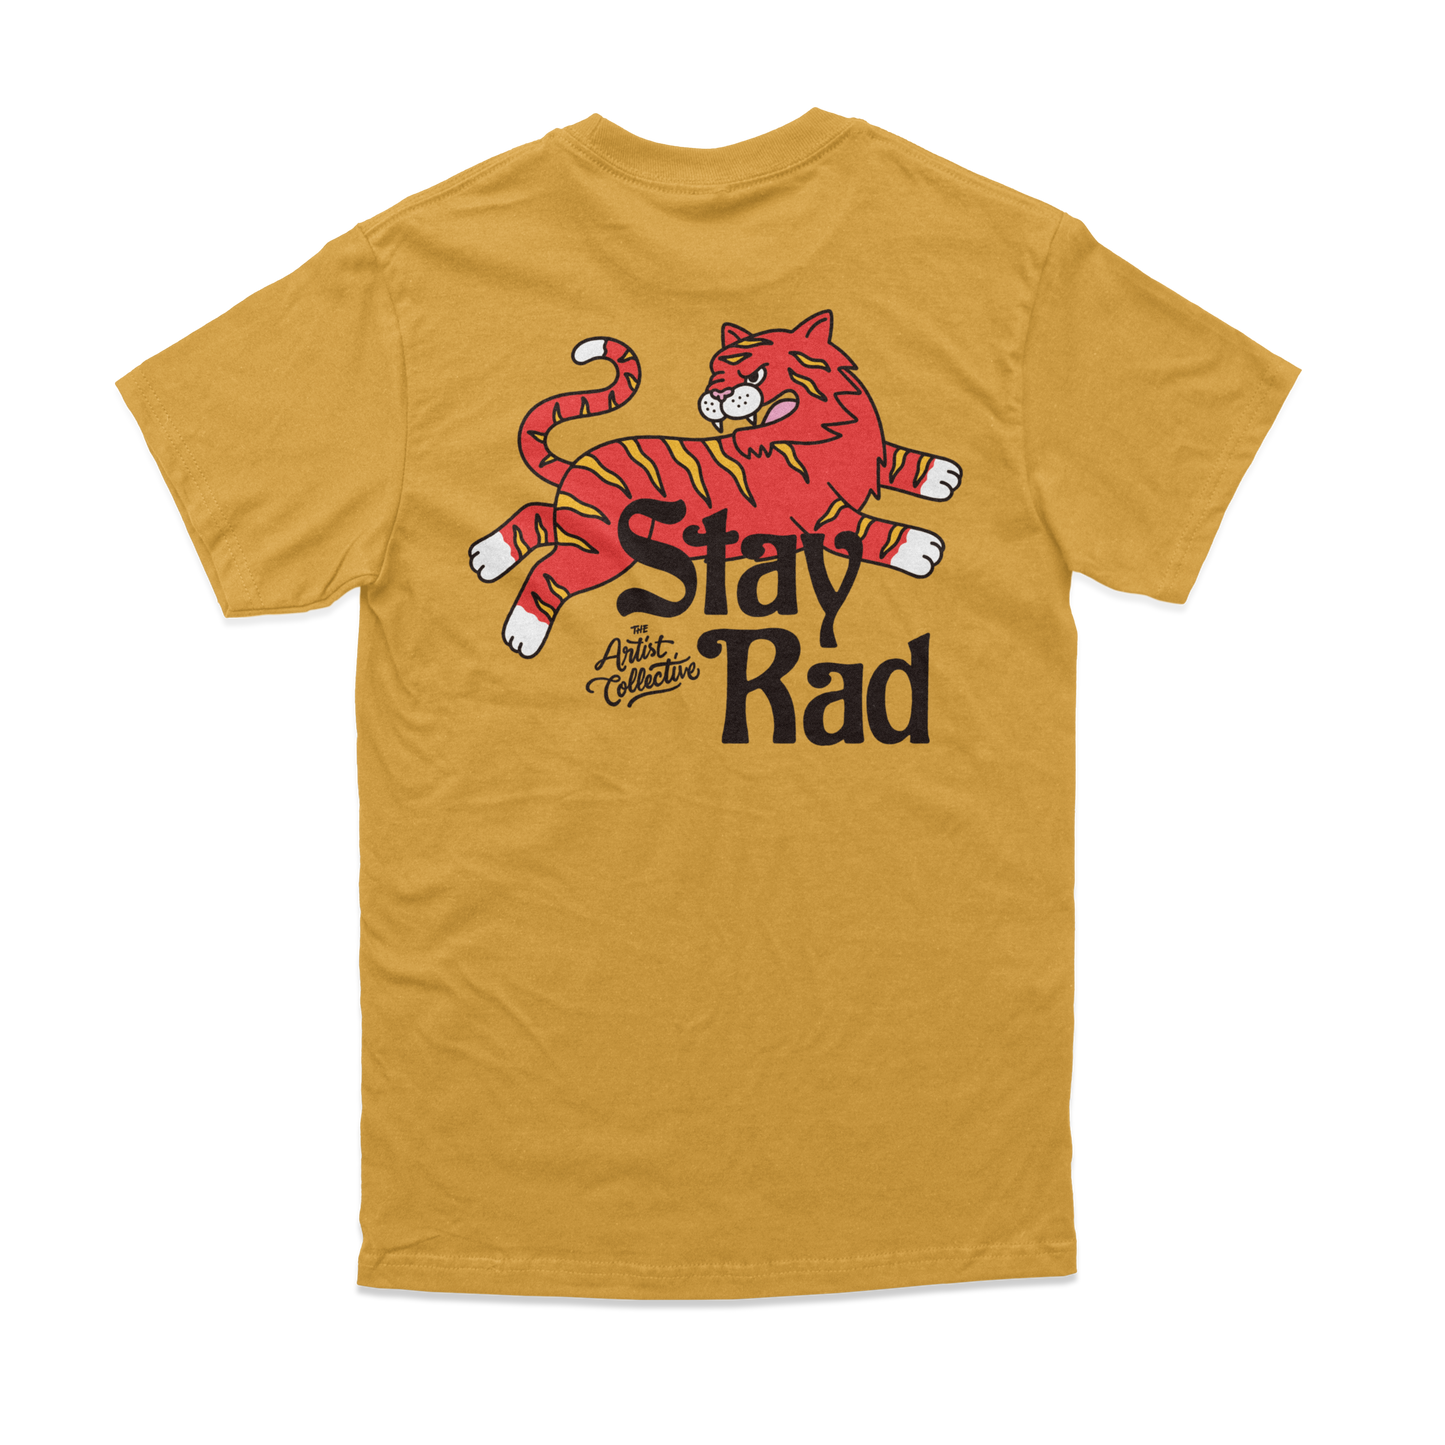 Stay Rad Tee Shirt